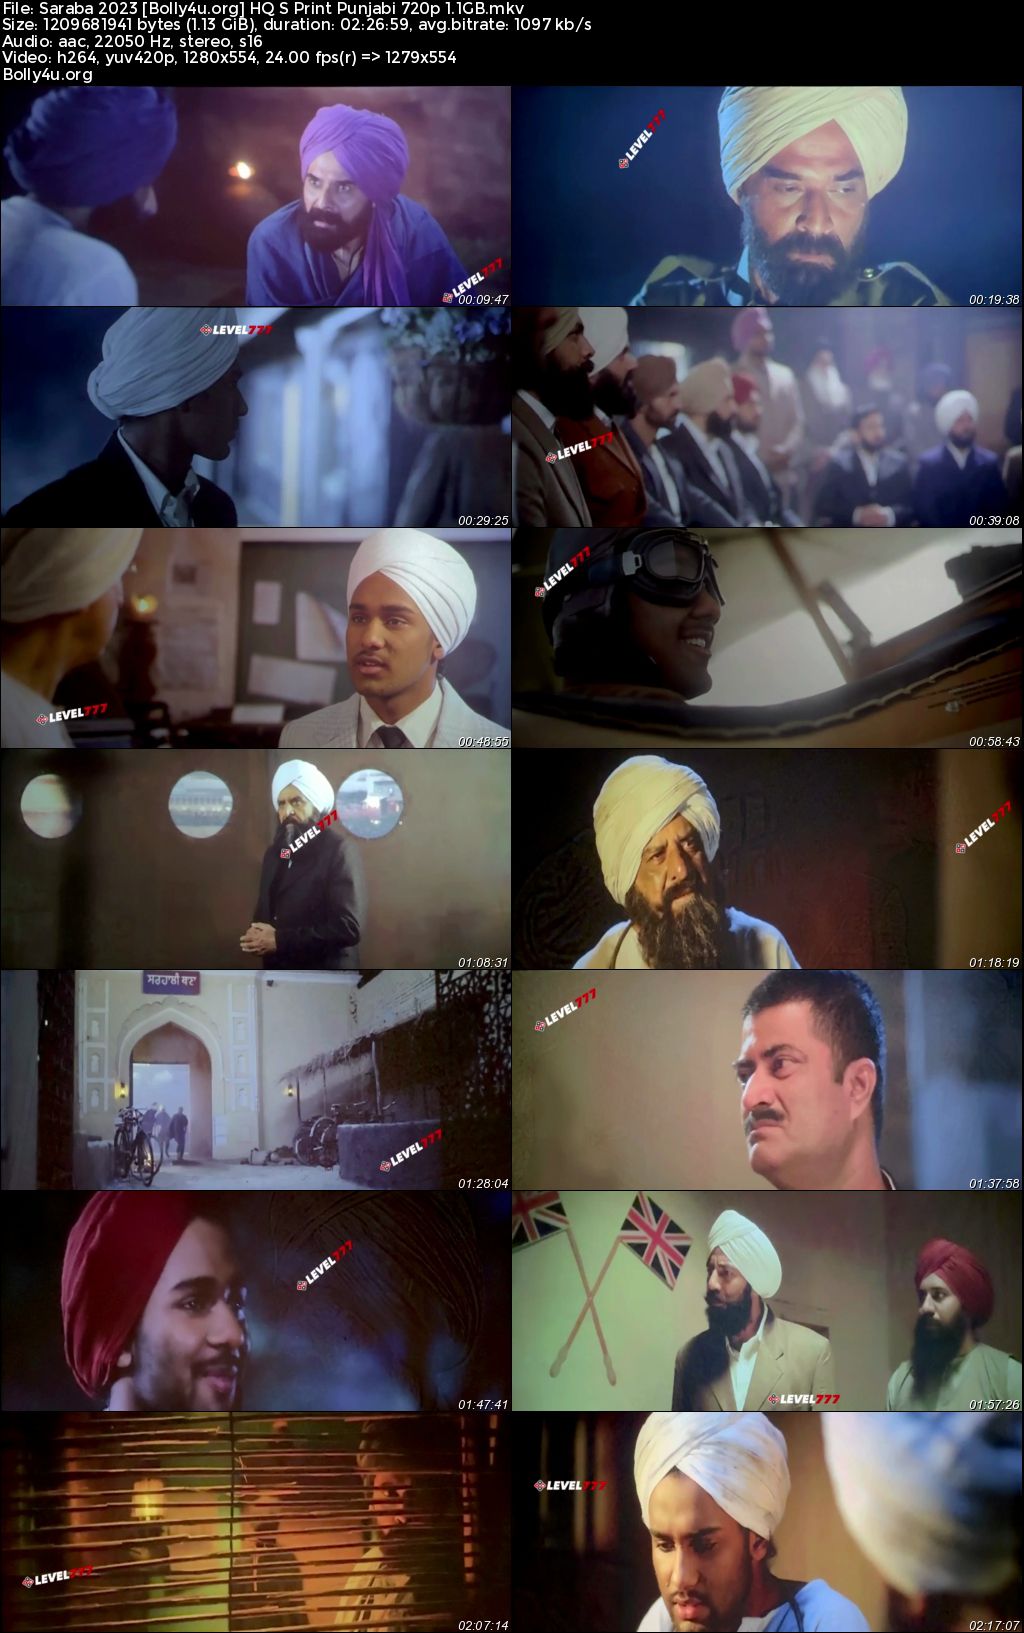 Saraba 2023 HQ S Print Punjabi Full Movie Download 1080p 720p 480p